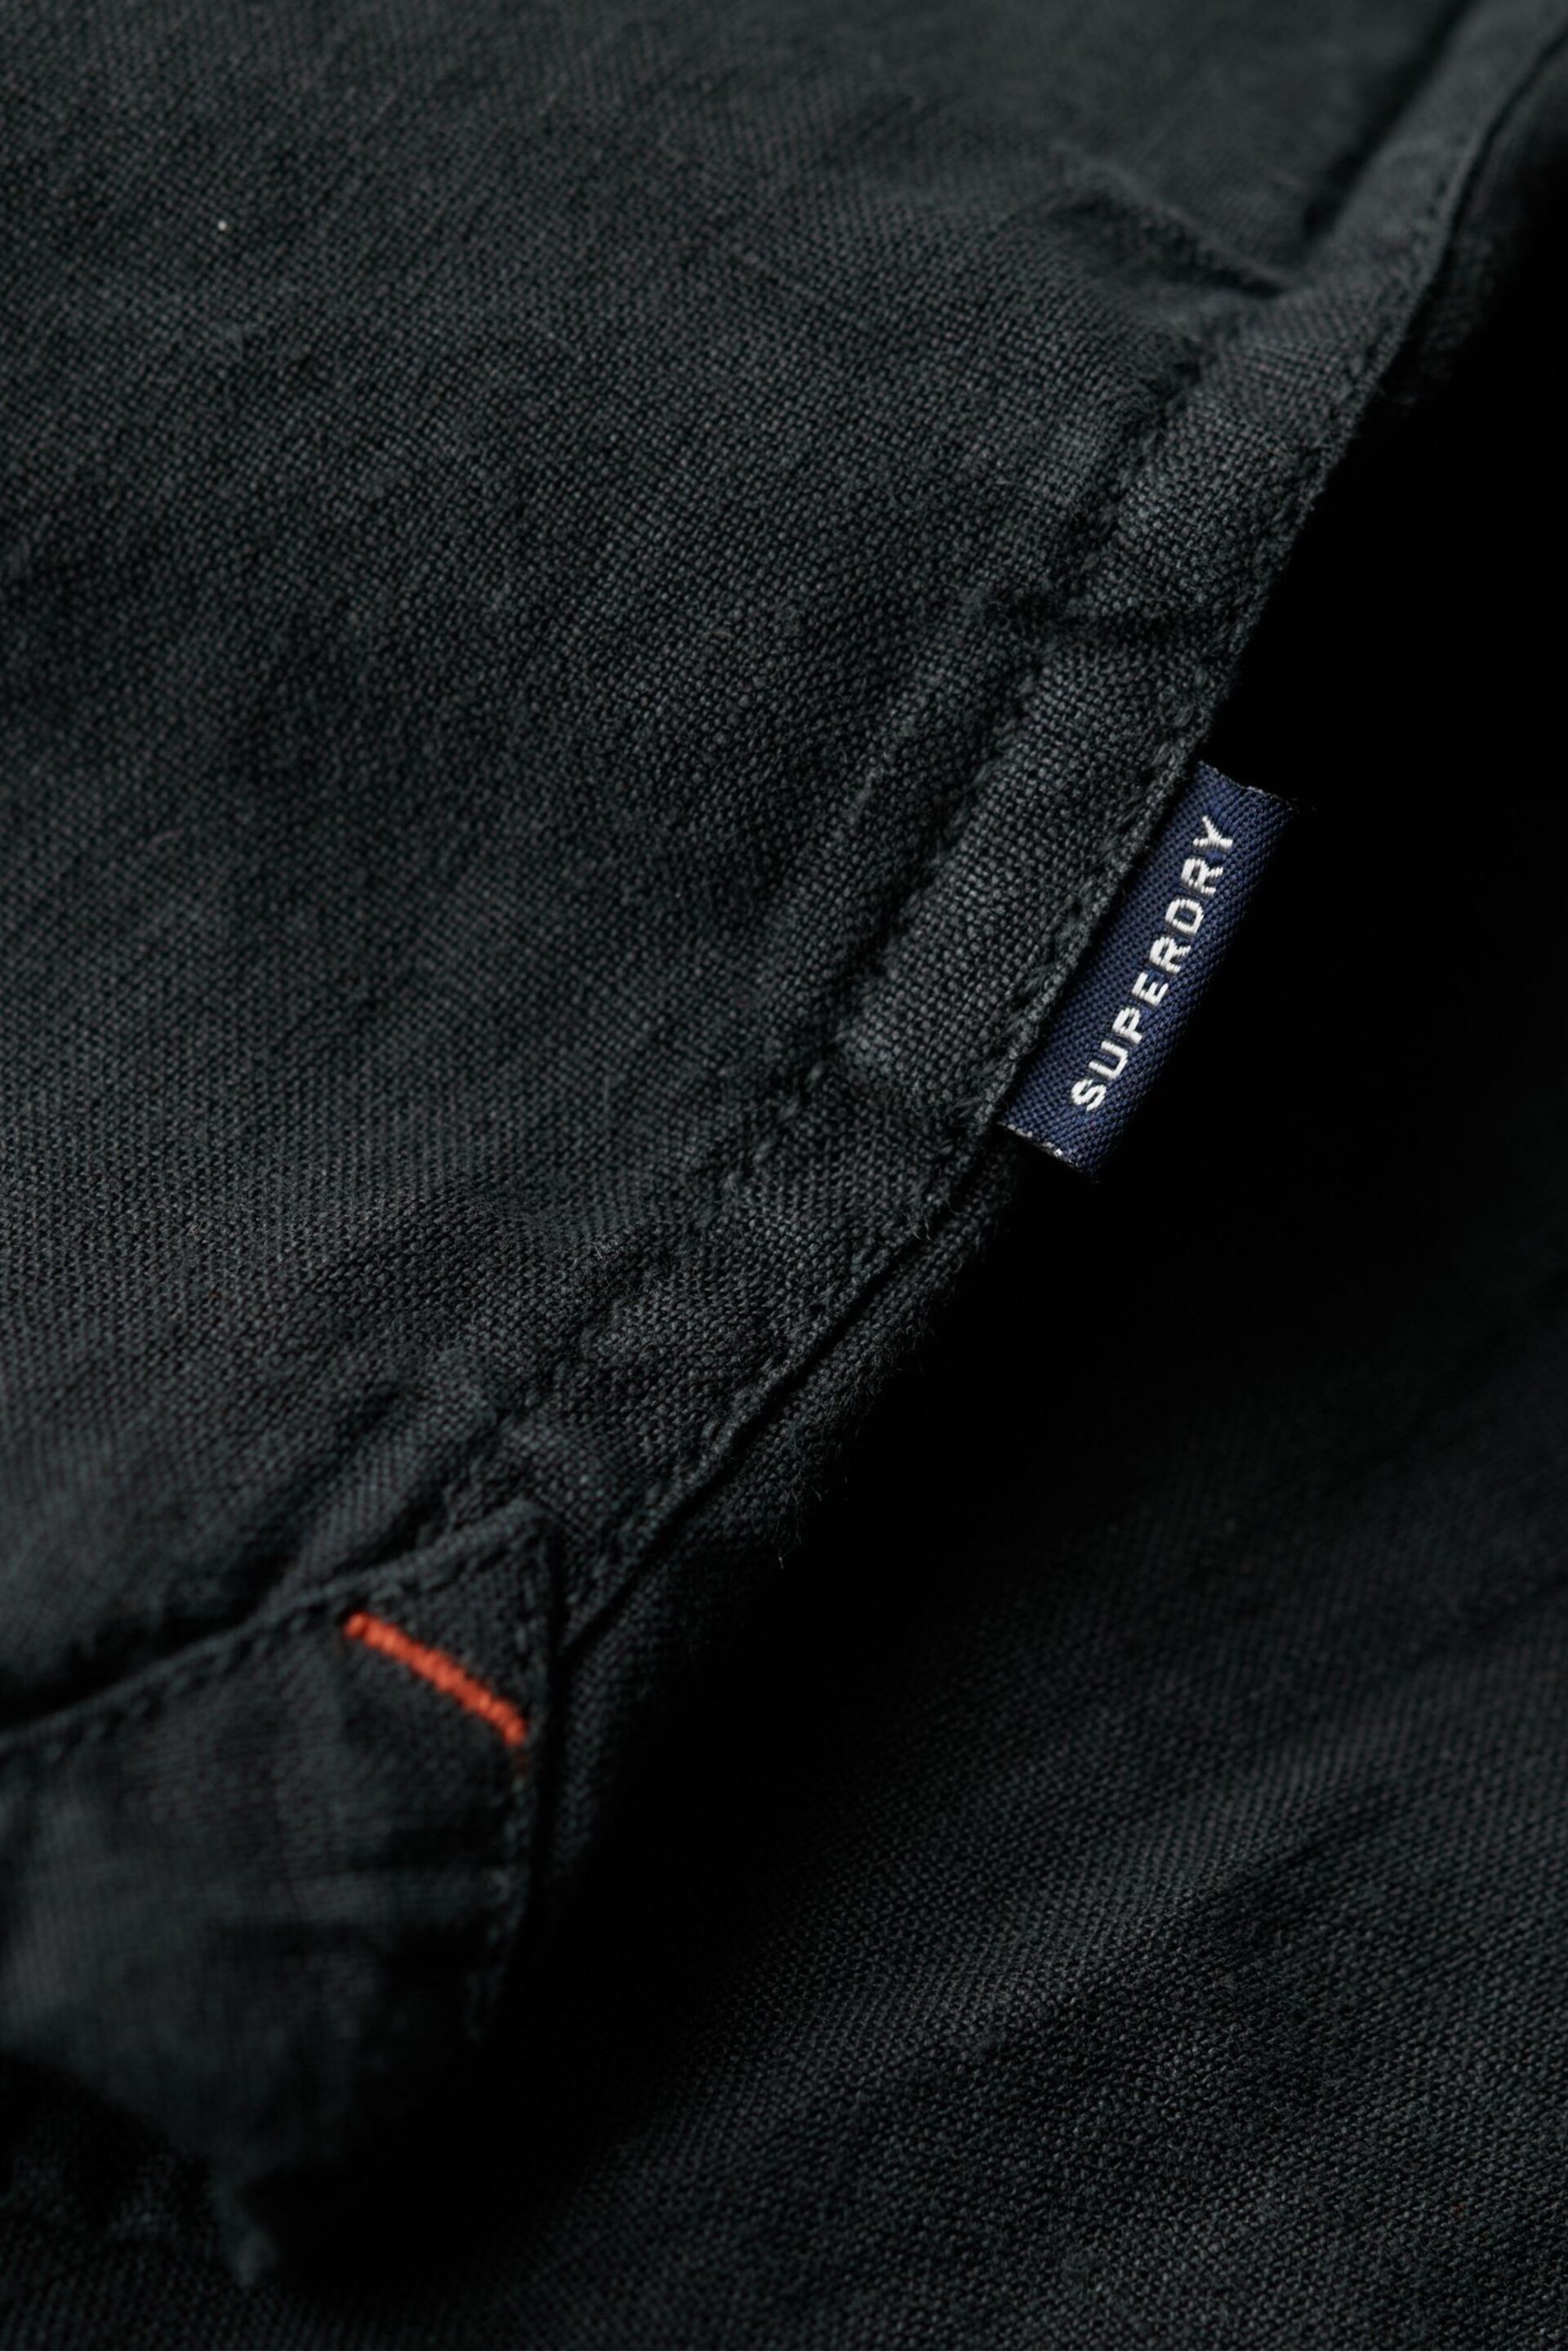 Superdry Black Studios Casual Linen Short Sleeved Shirt - Image 7 of 7